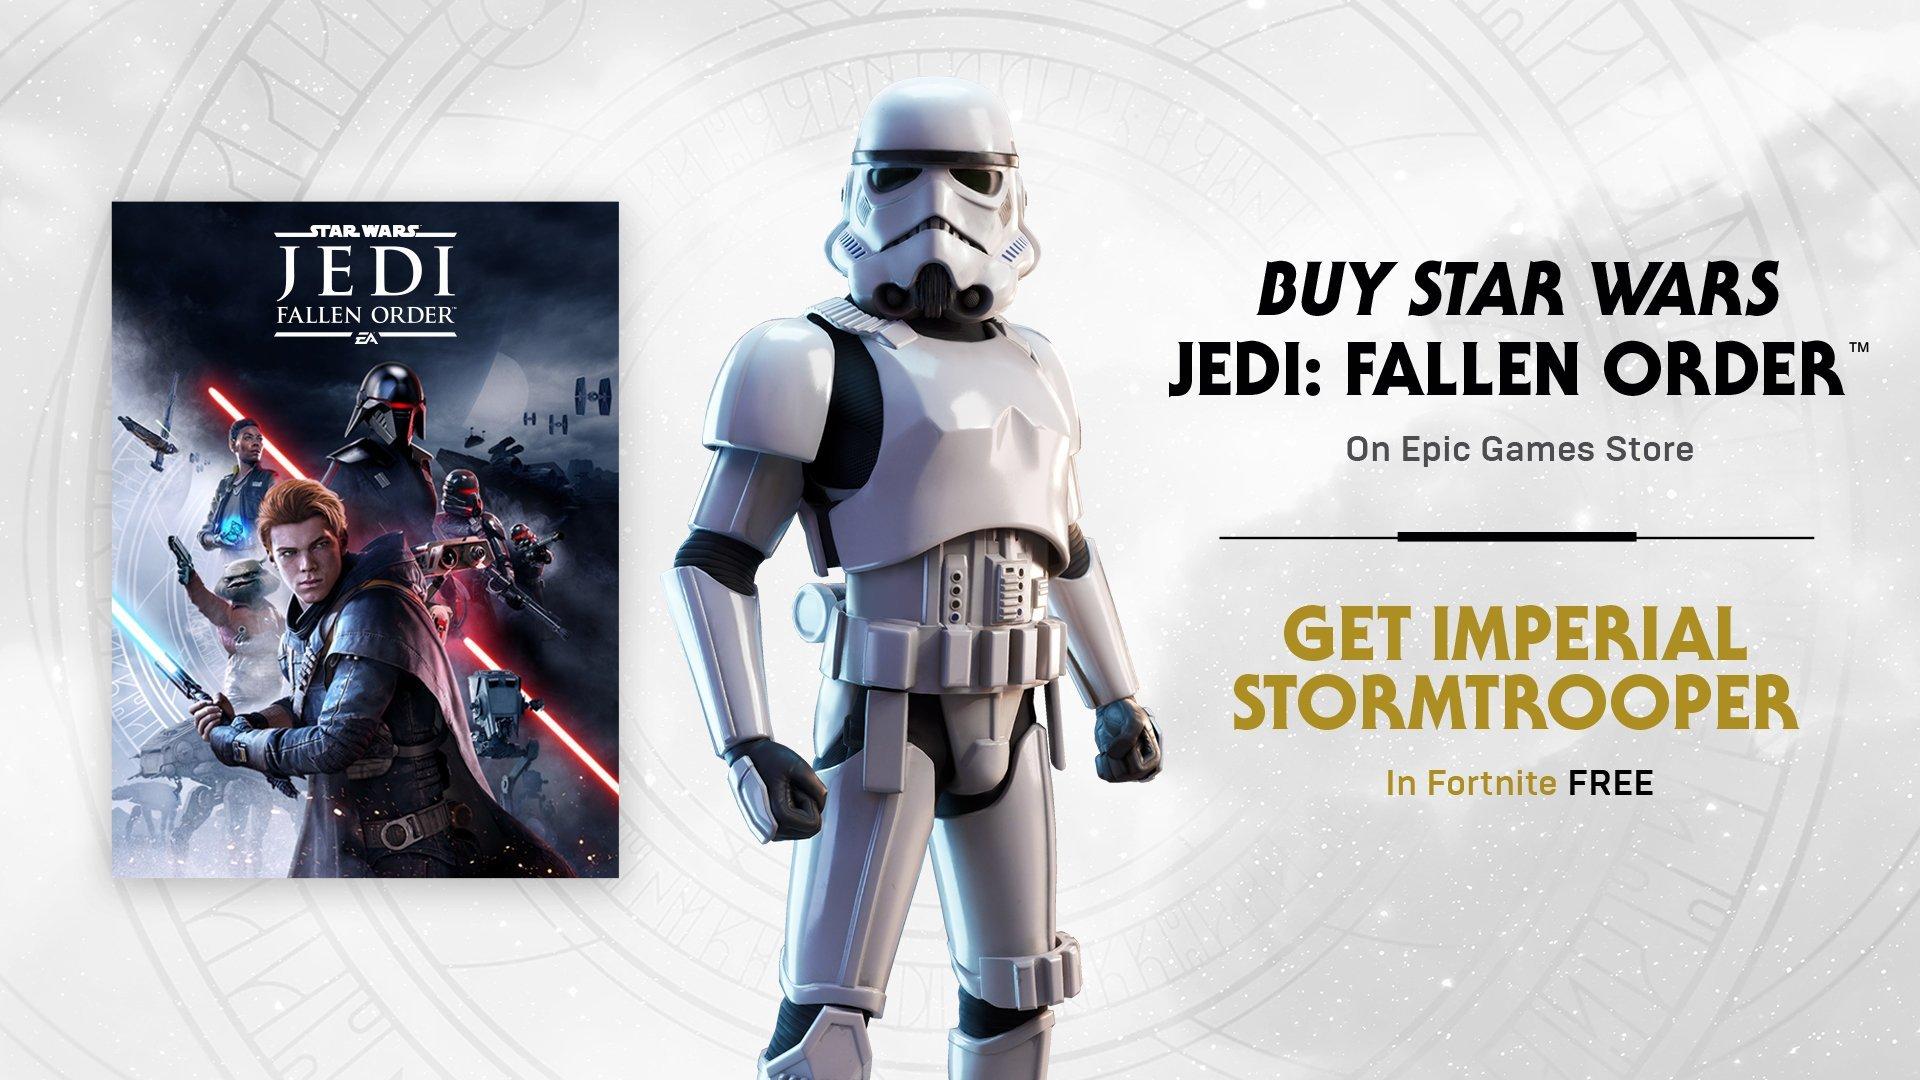 Star Wars + Fortnite event brings Jedi: Fallen Order to